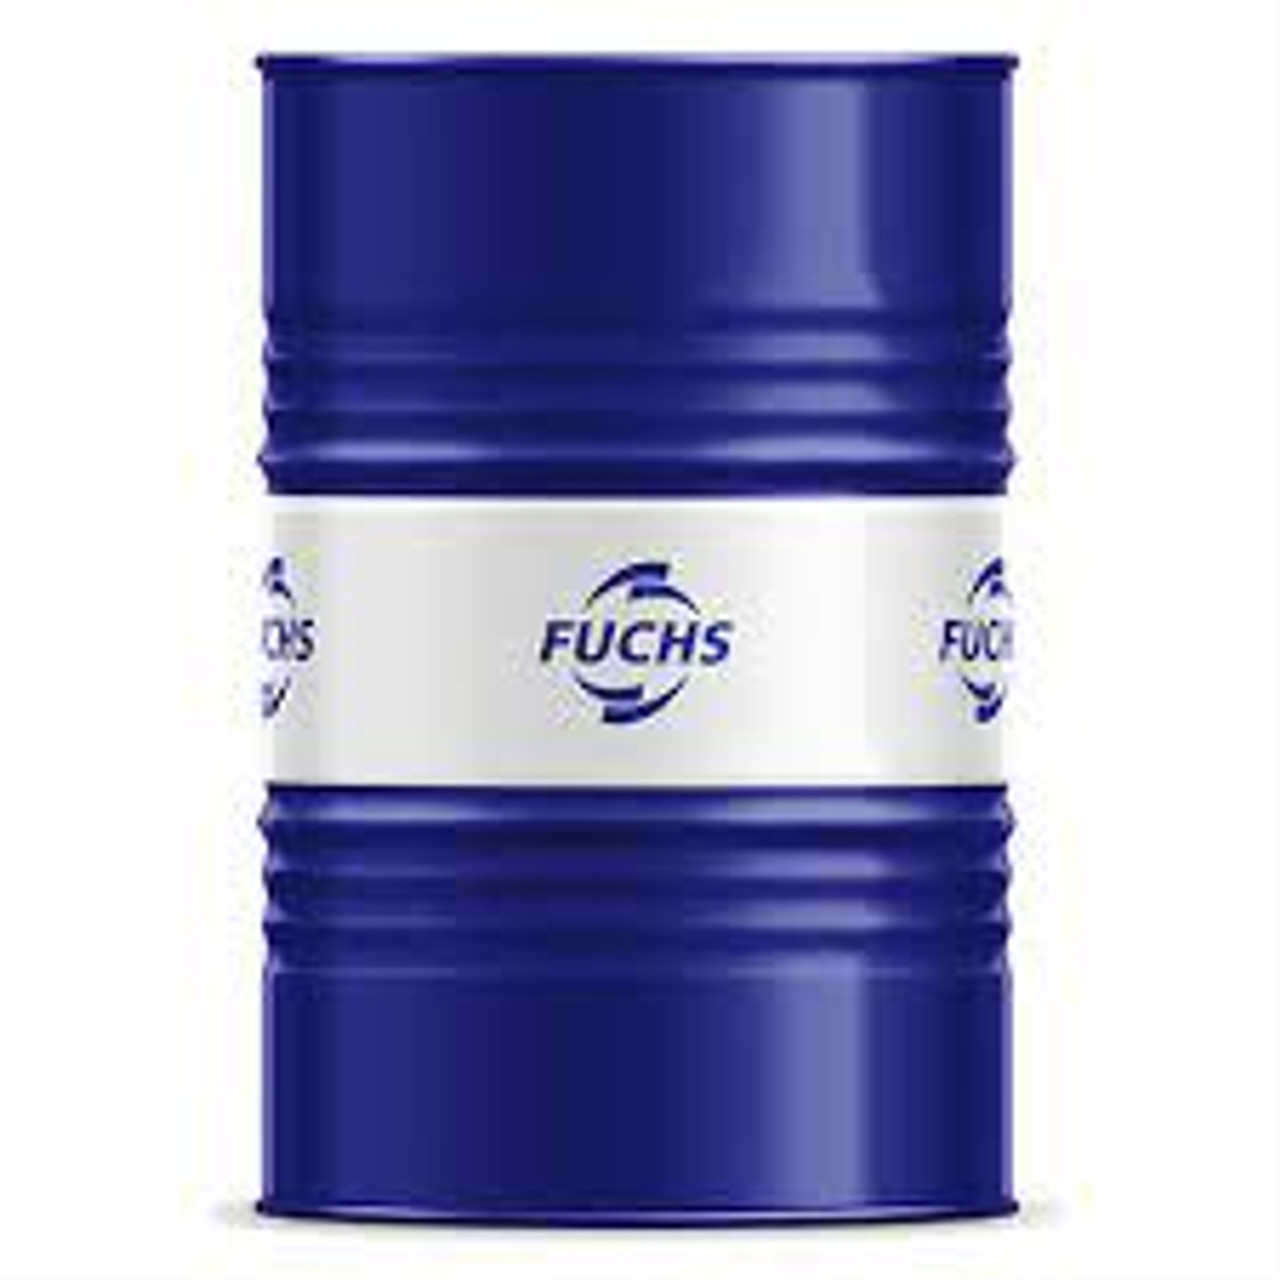 Fuchs Reonlin Unisyn CLP 68 - 55 gallon Drum